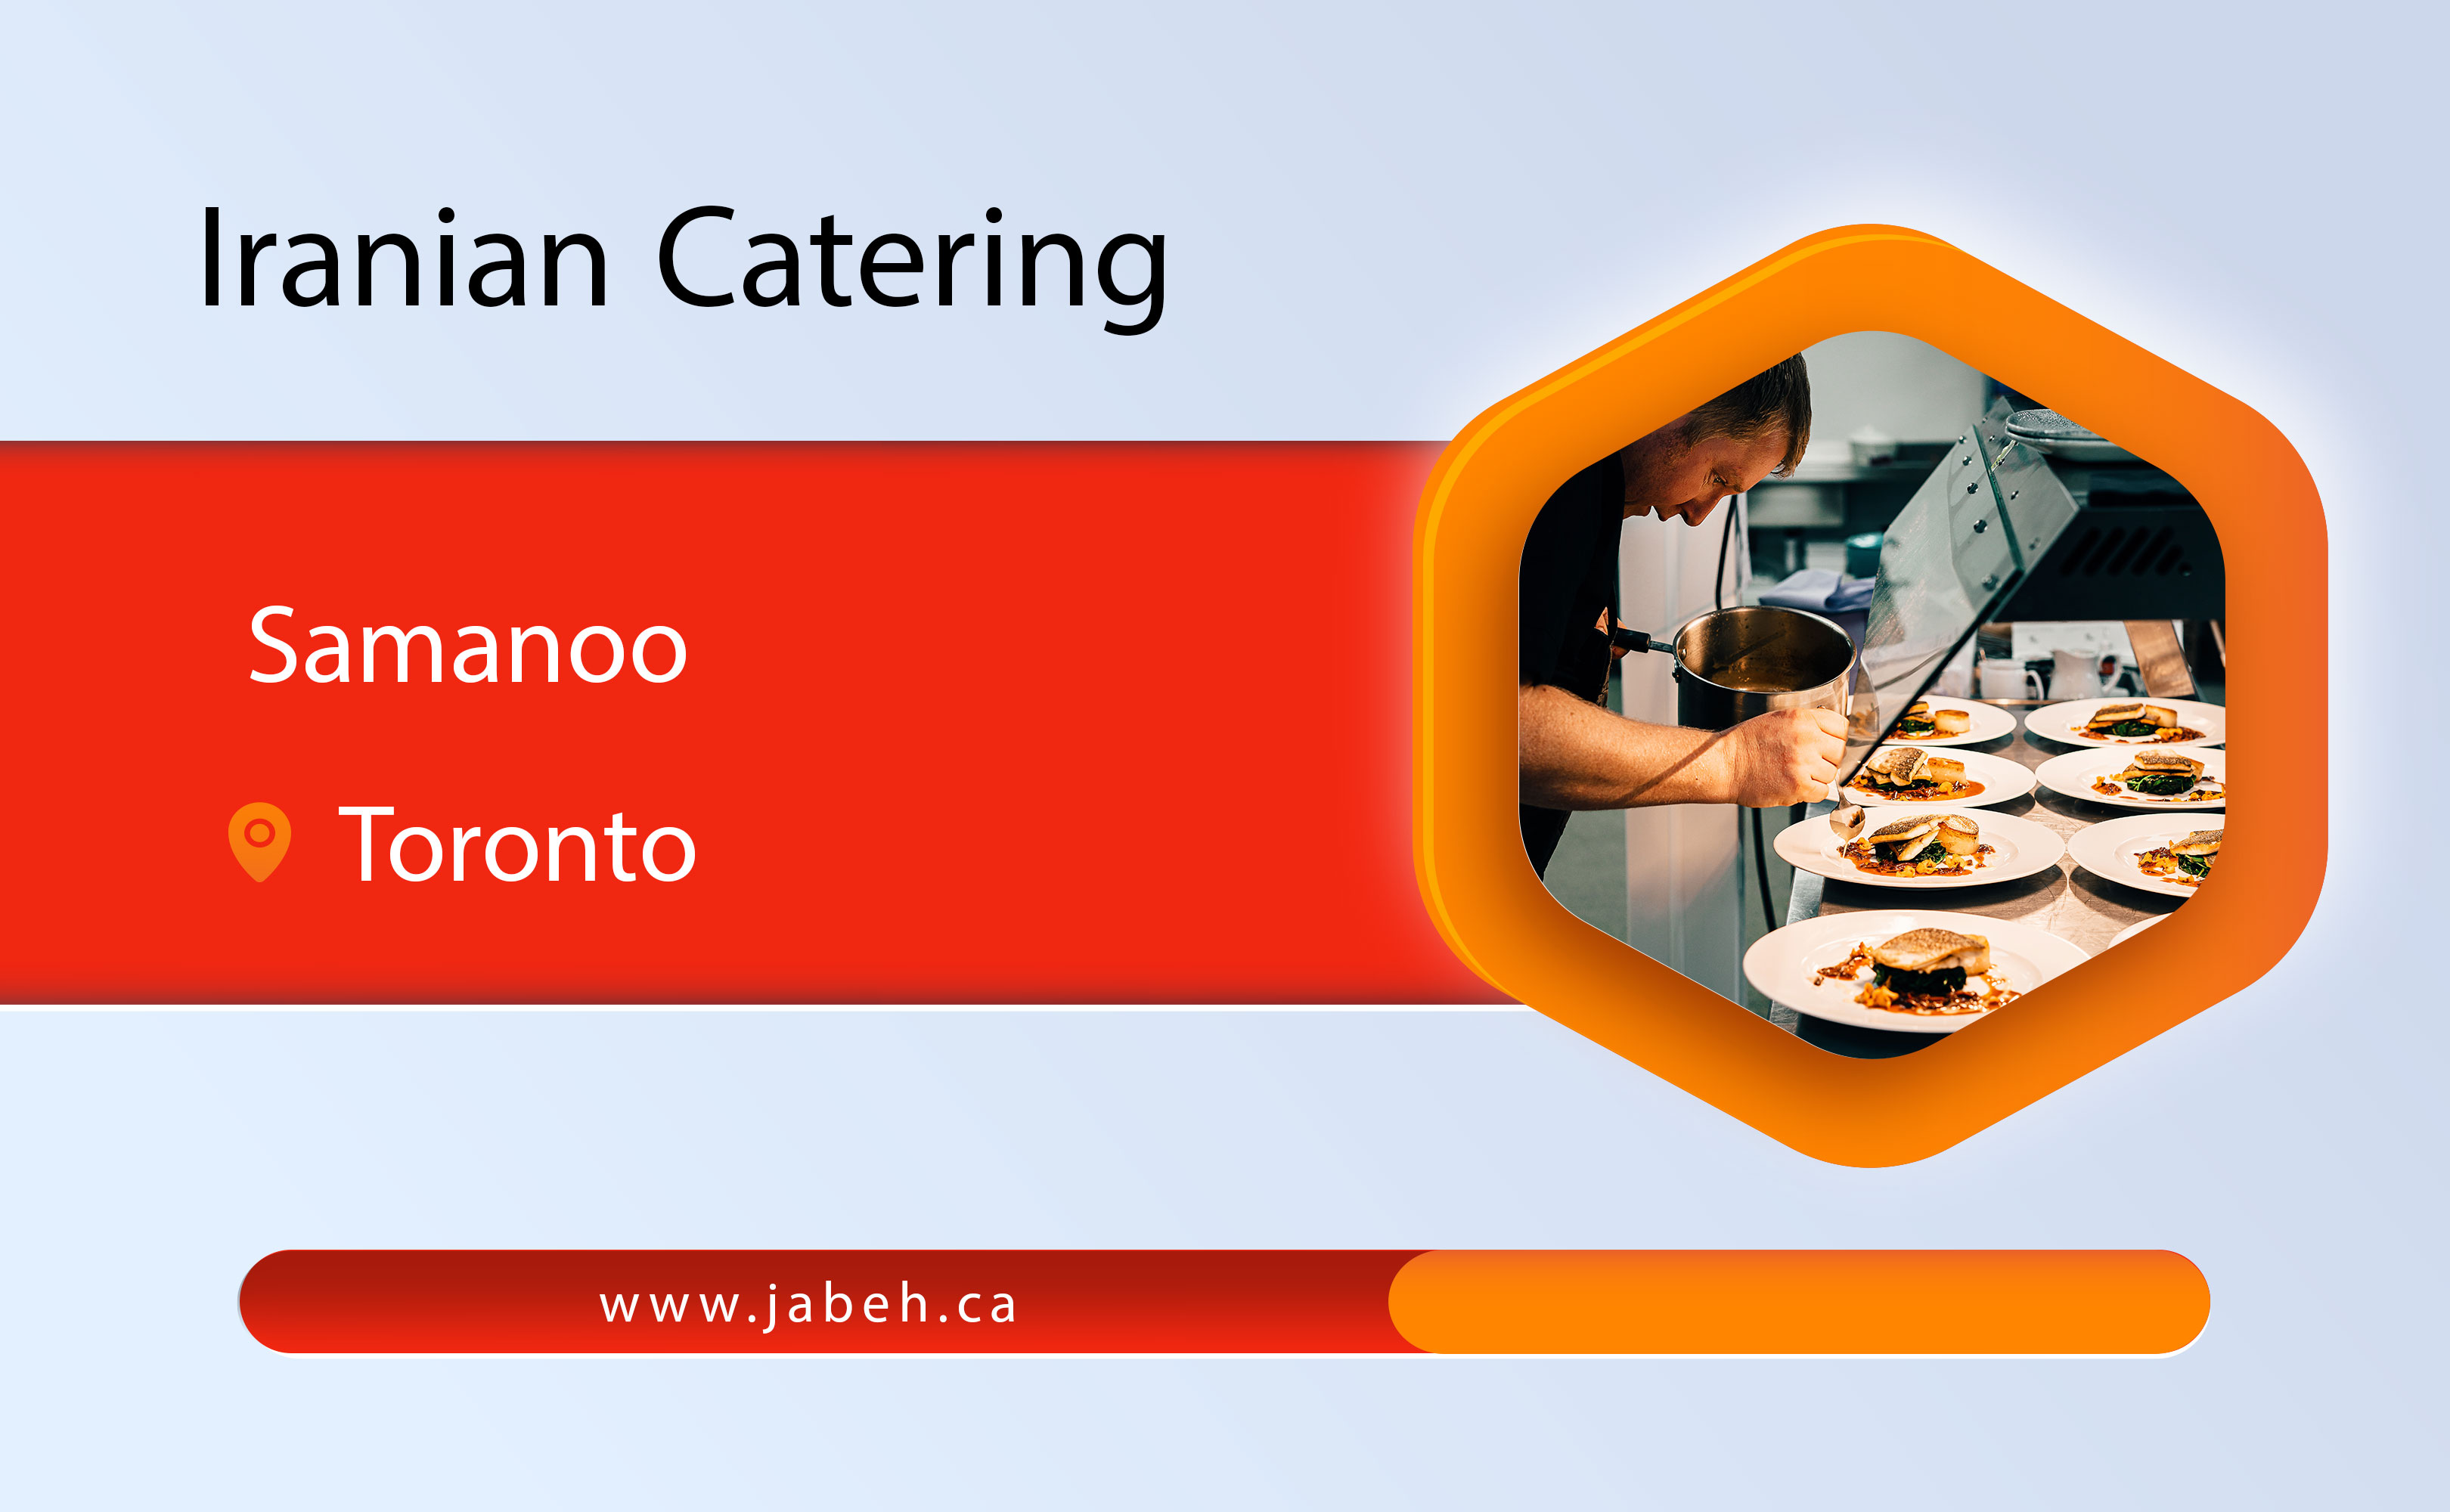 Semno Iranian Catering in Toronto